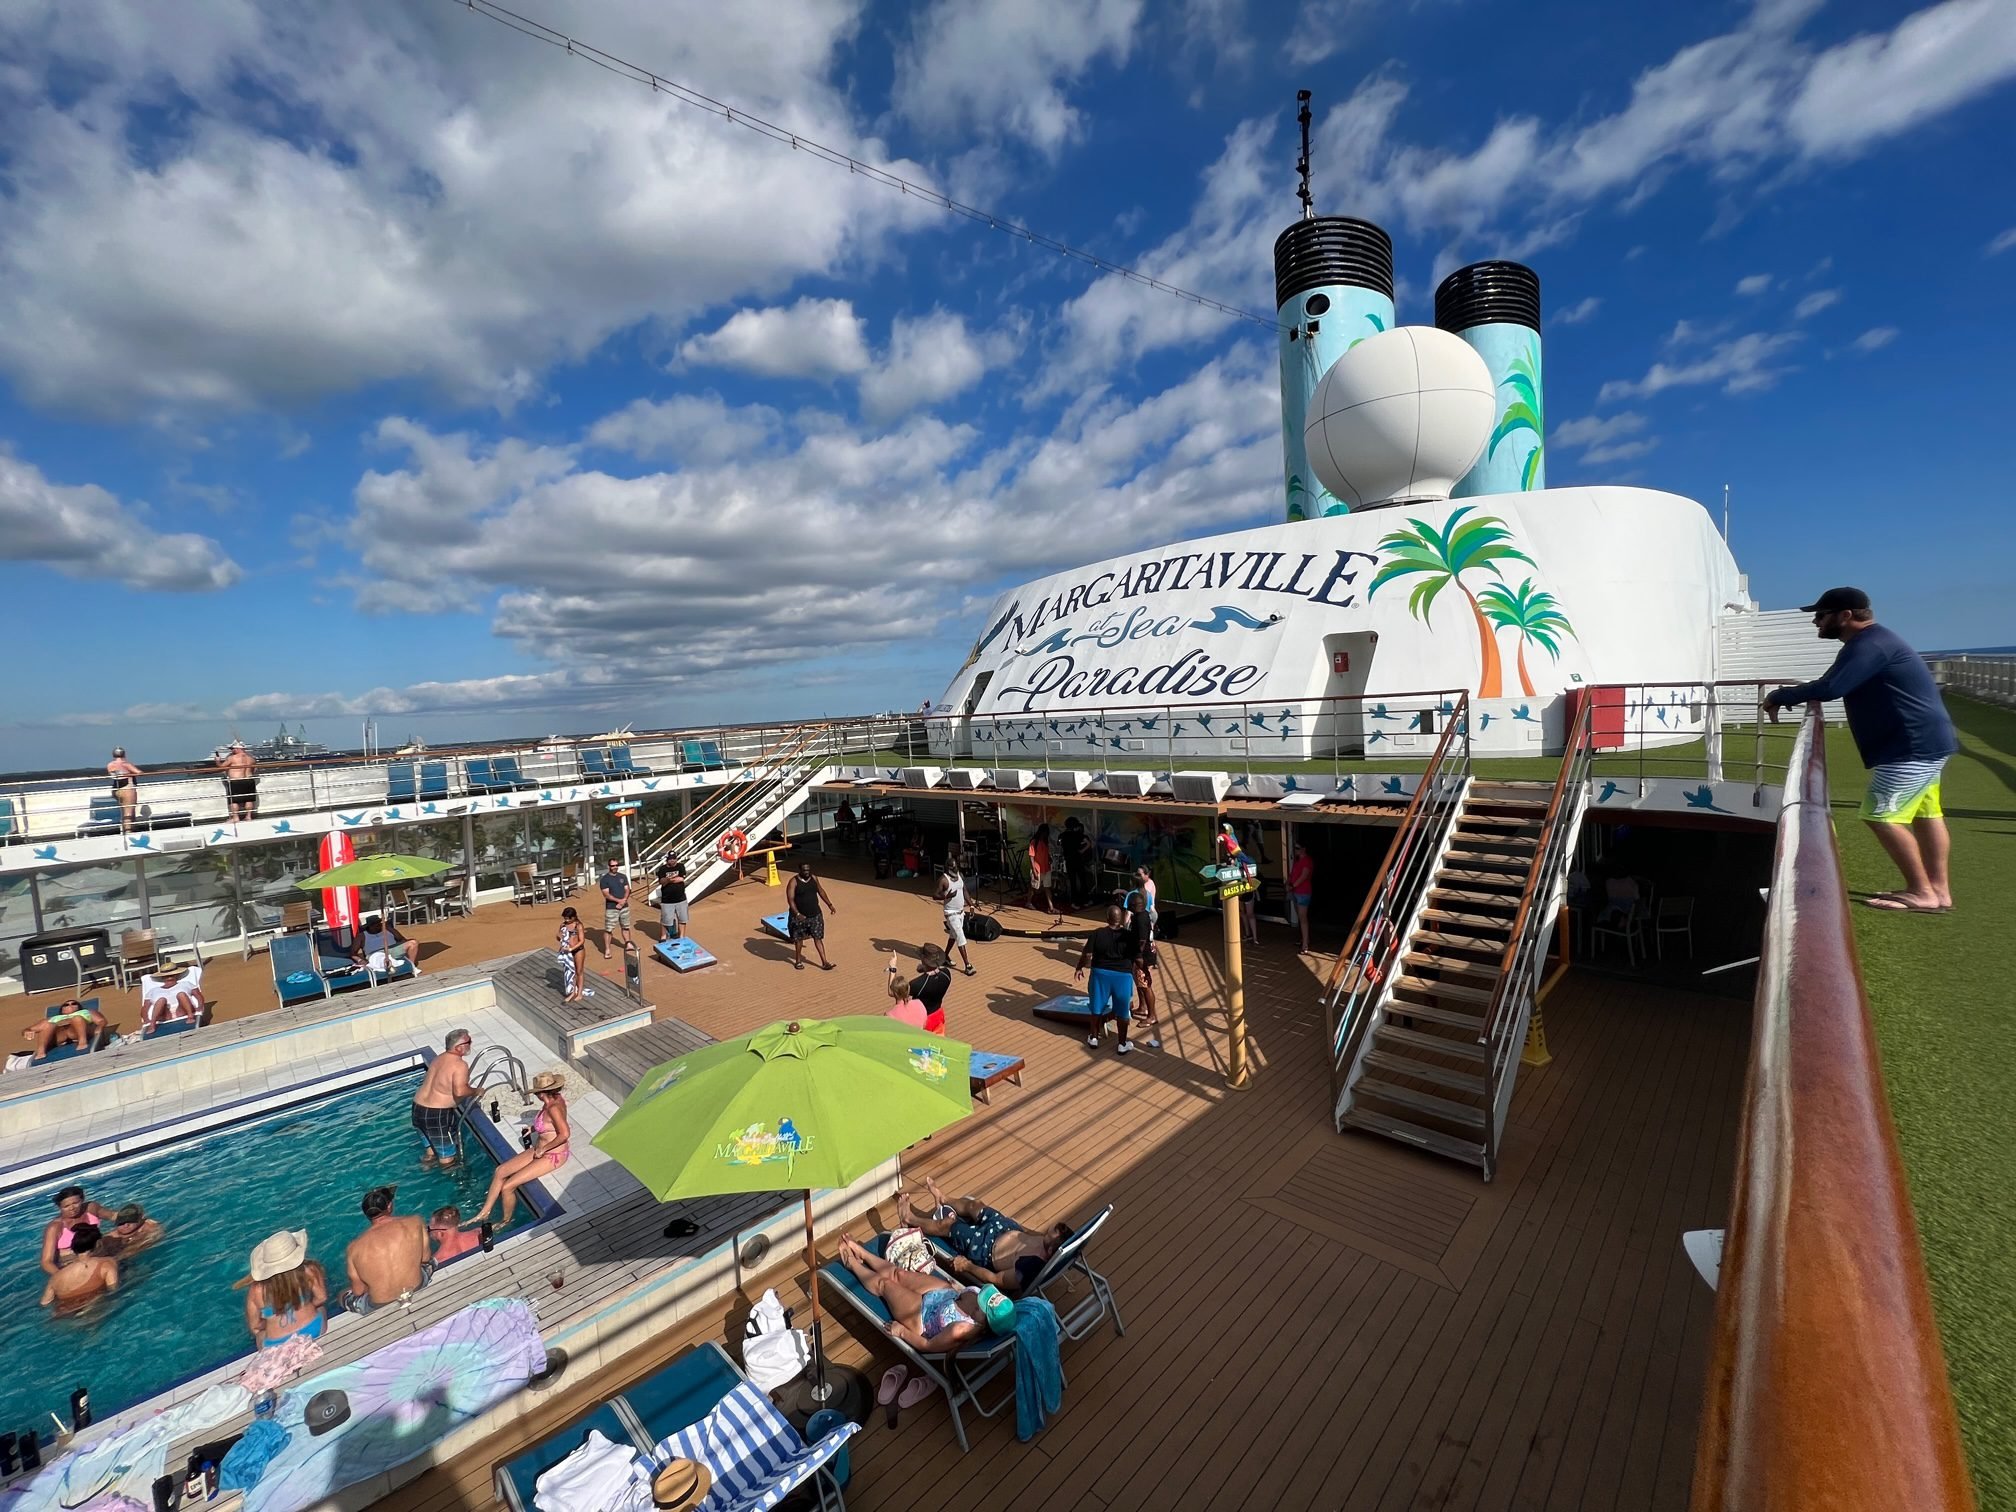 Margaritaville-at-Sea-Cruise-Deck.jpg